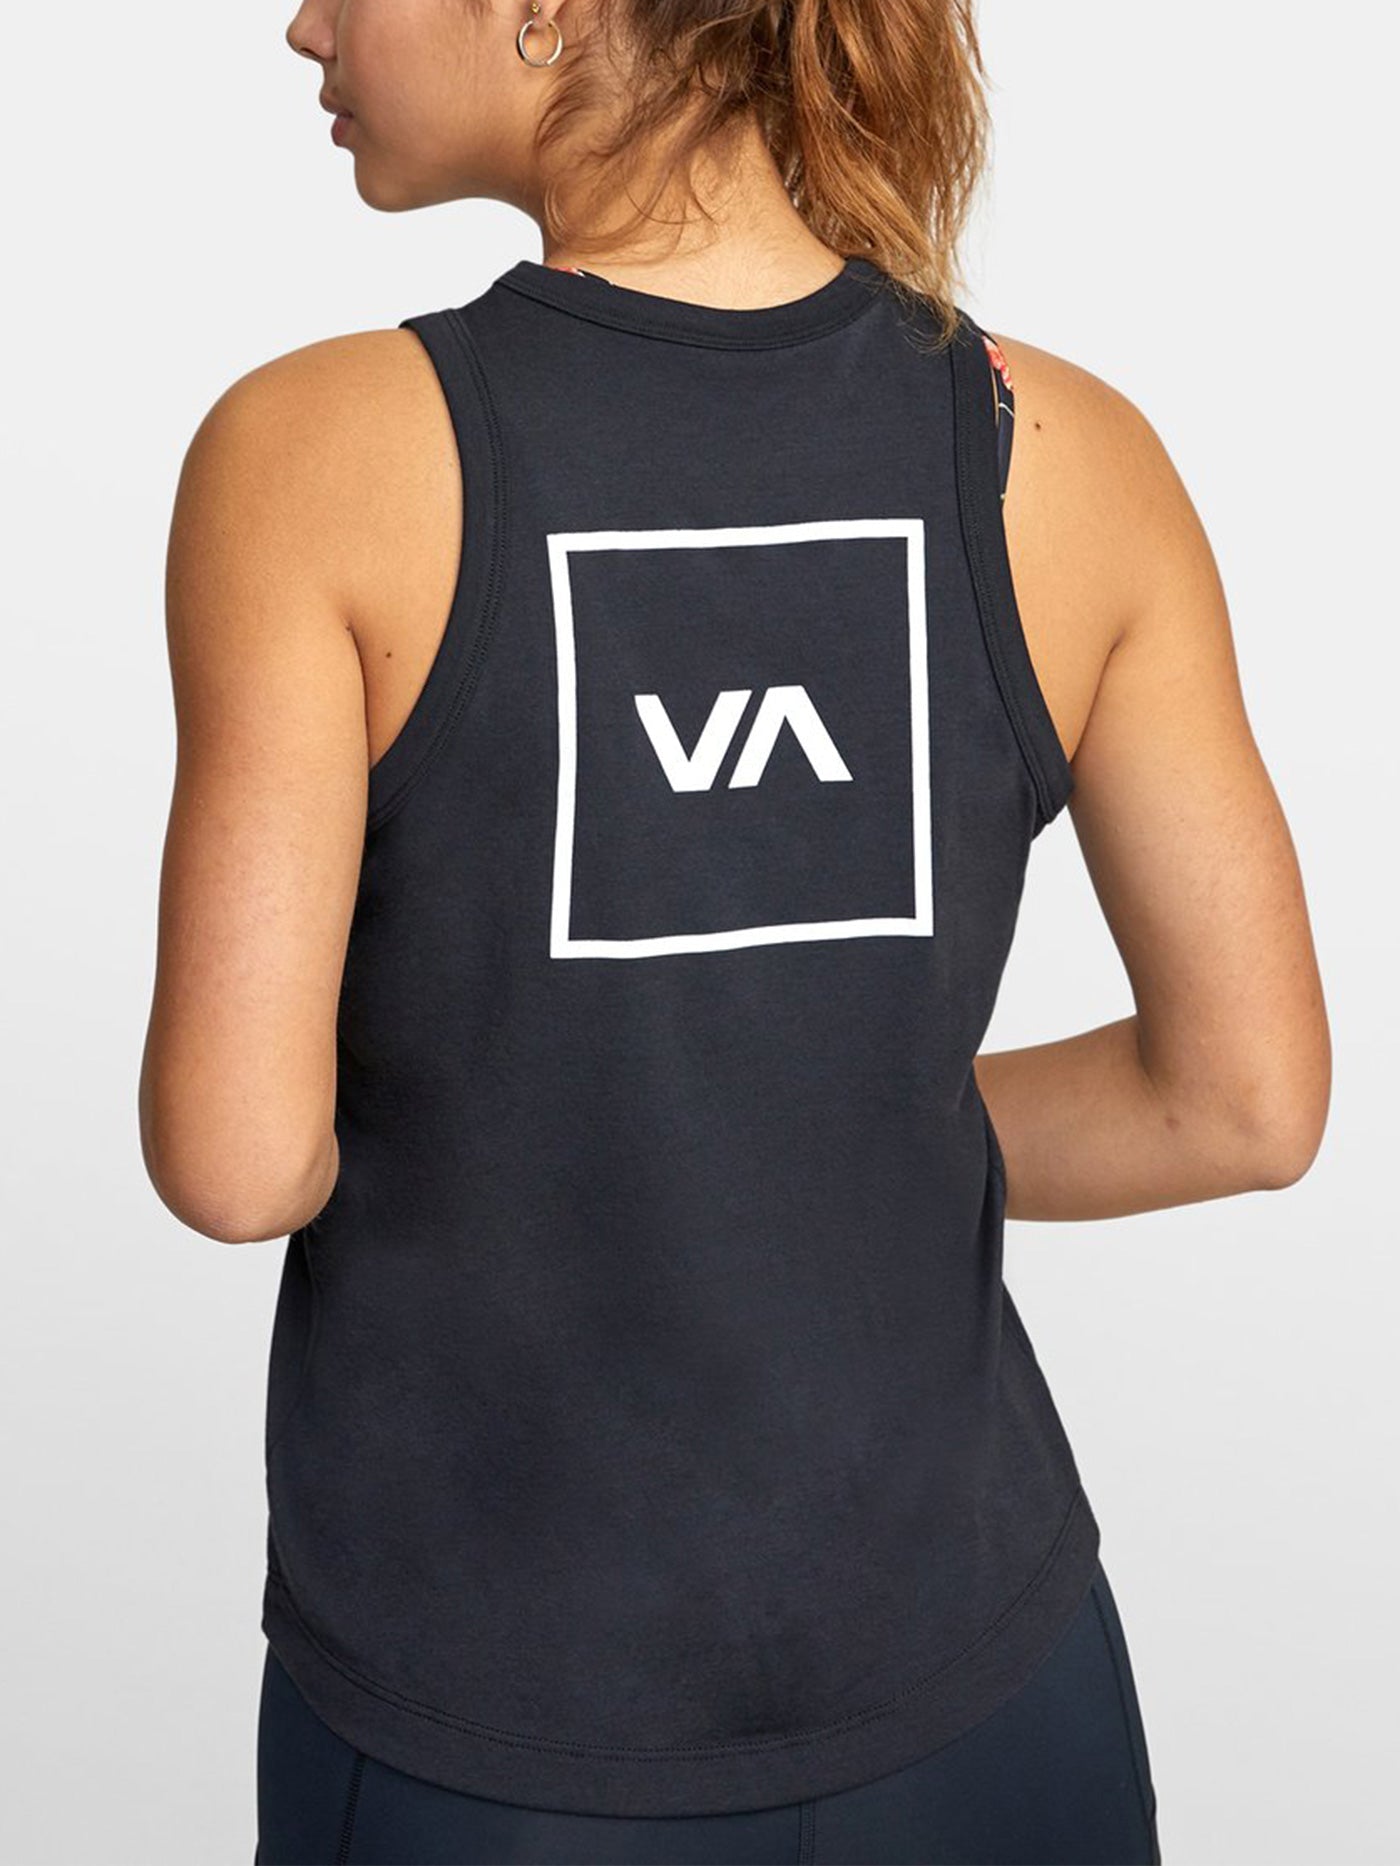 RVCA VA Muscle Workout Tank Top